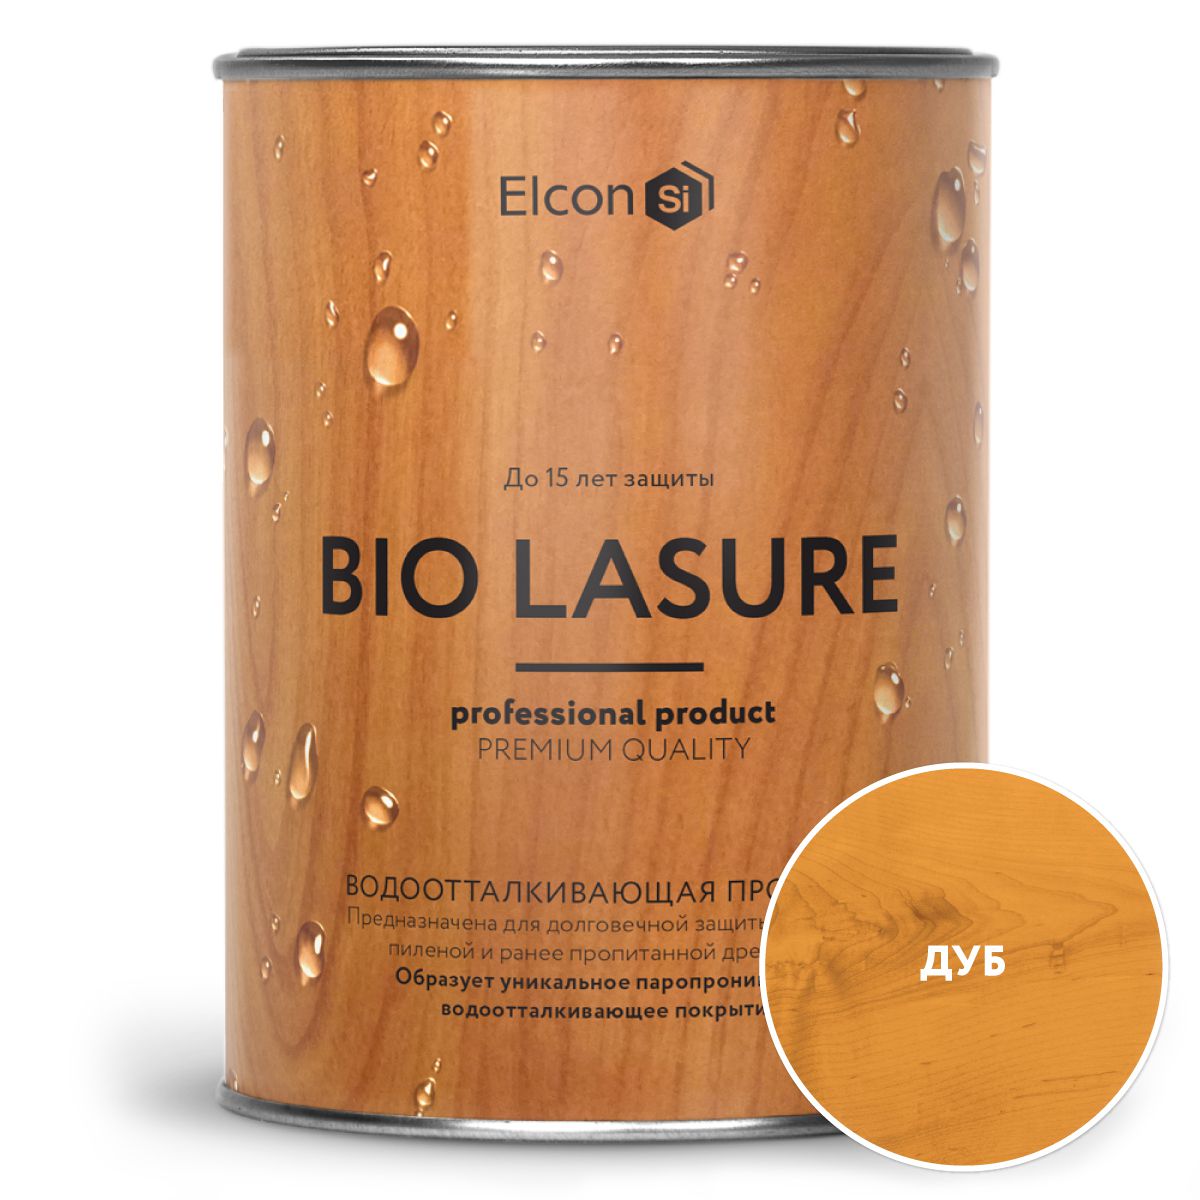 Водоотталкивающая пропитка для защиты дерева, Elcon Bio Lasure, дуб 0,9л elcon антисептик для дерева bio lasure каштан 0 9 л 00 00461940